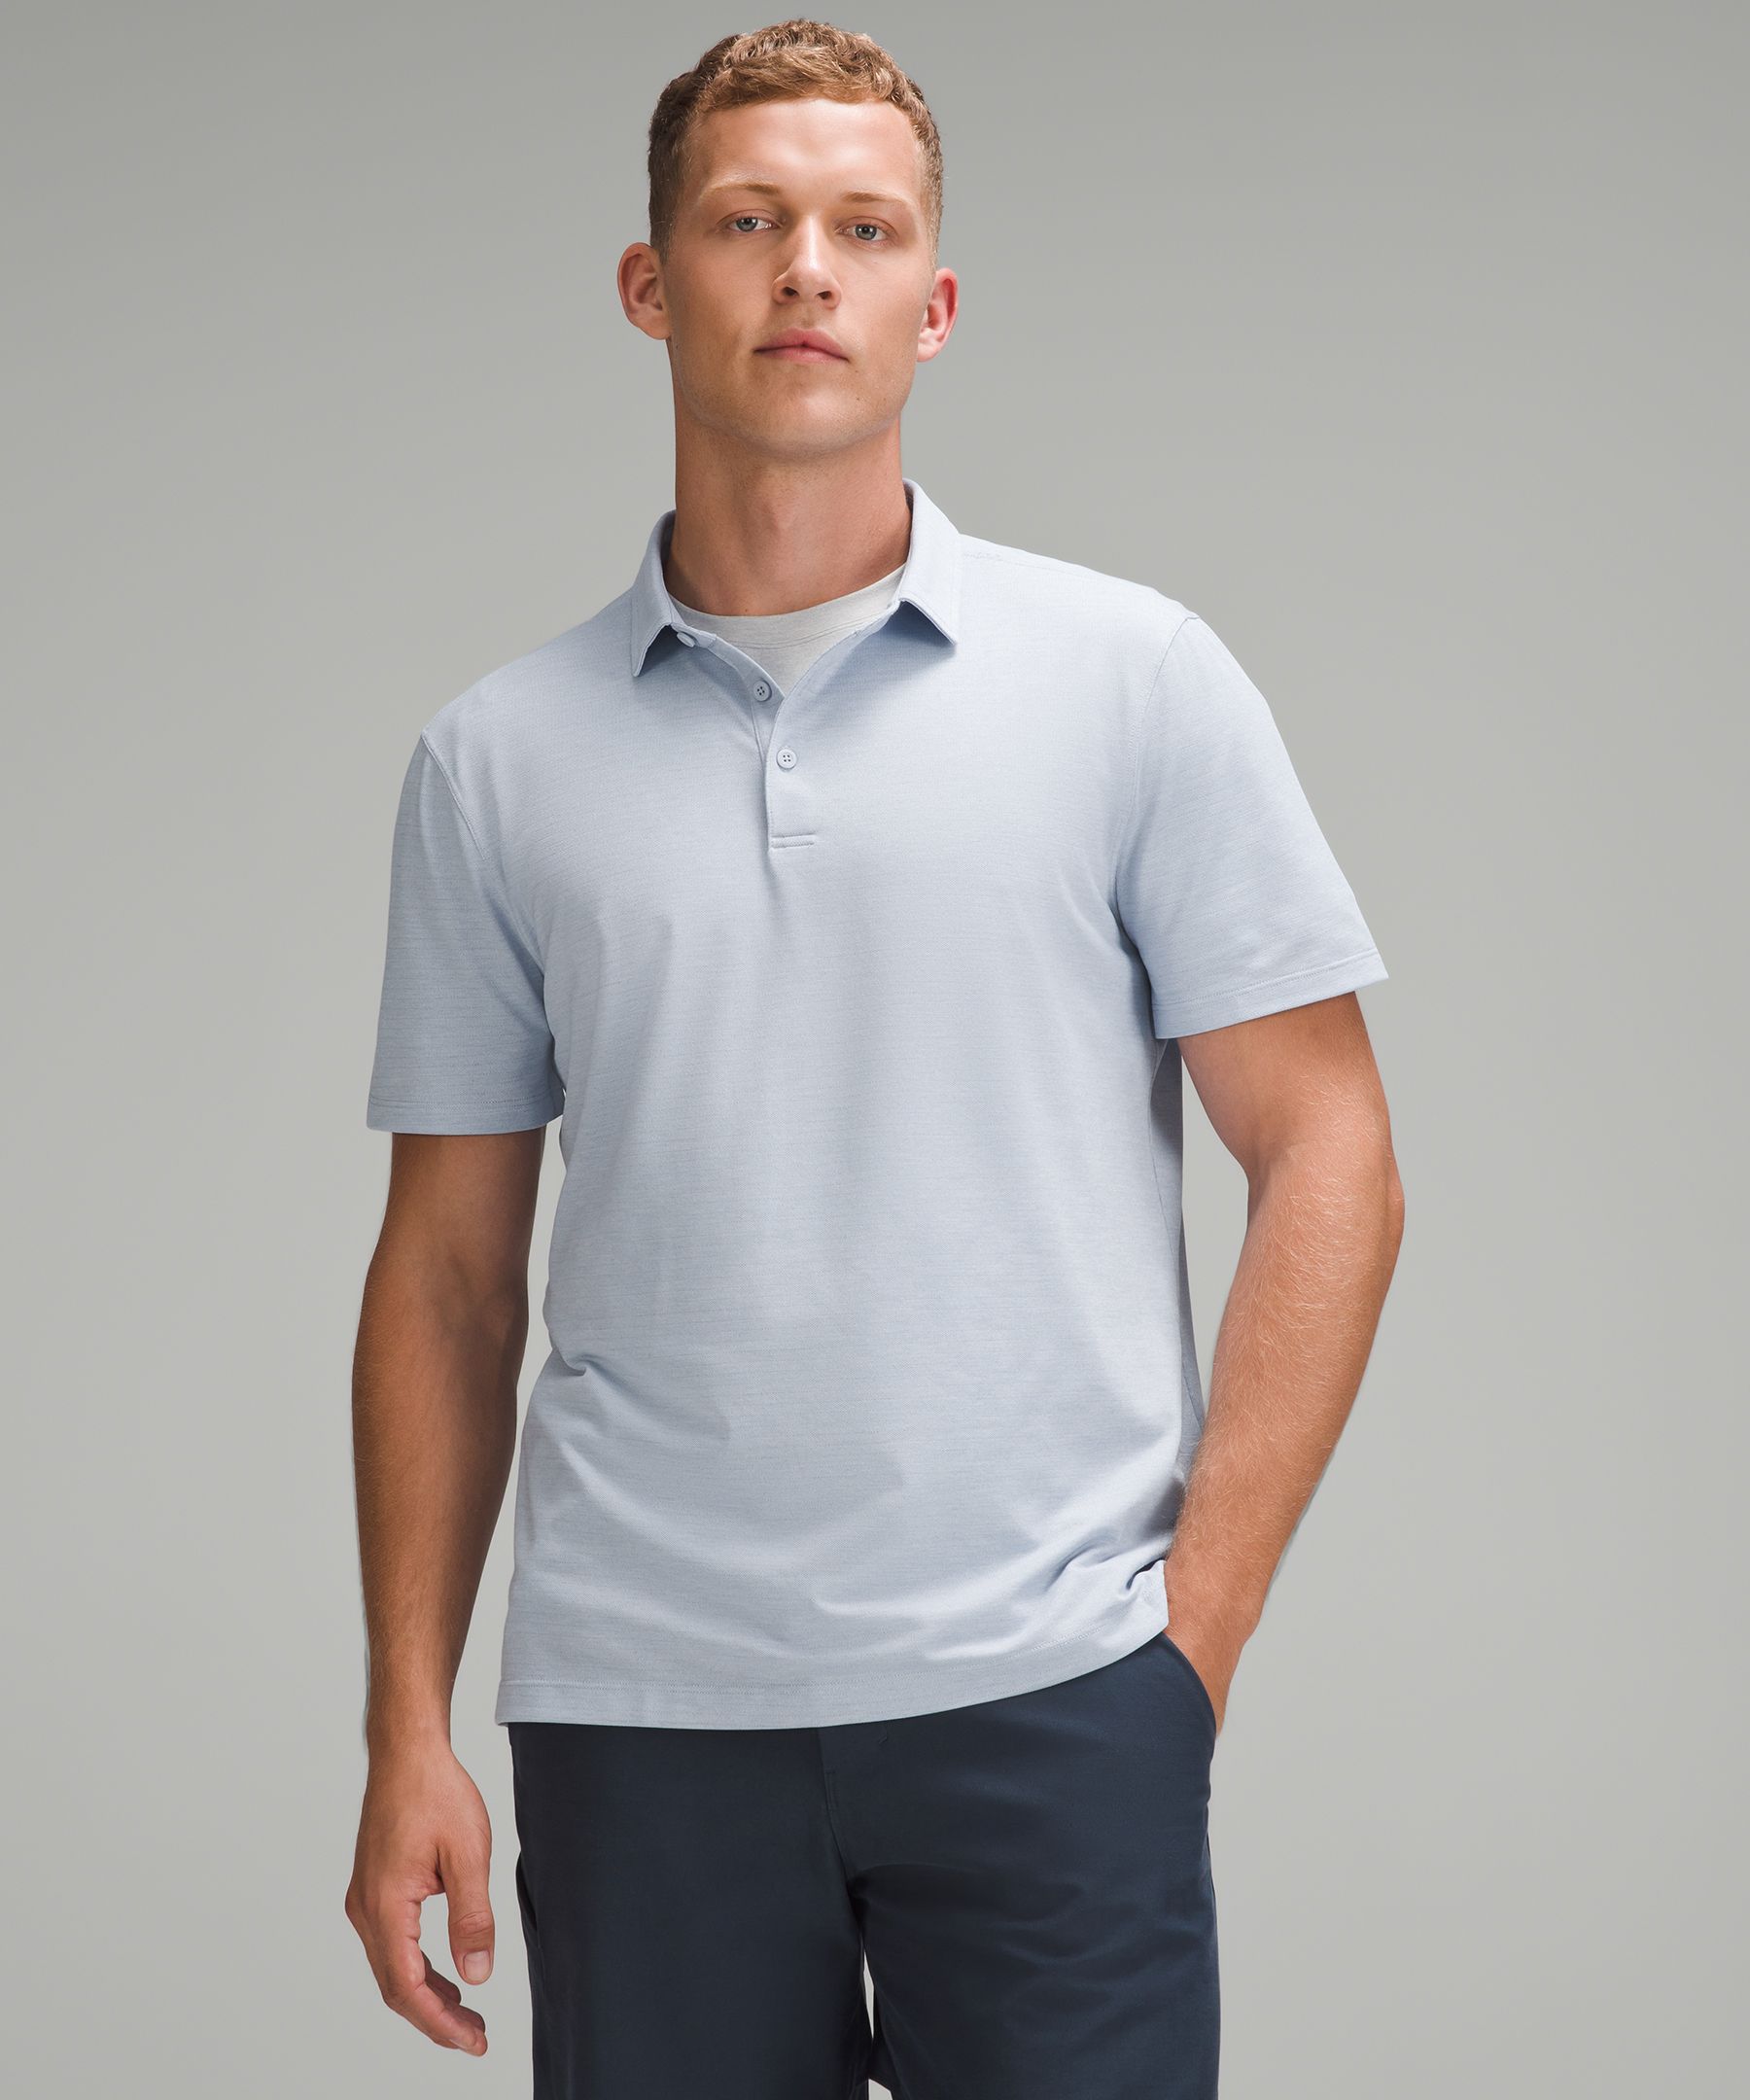 Lululemon Evolution Short Sleeve Polo Shirt